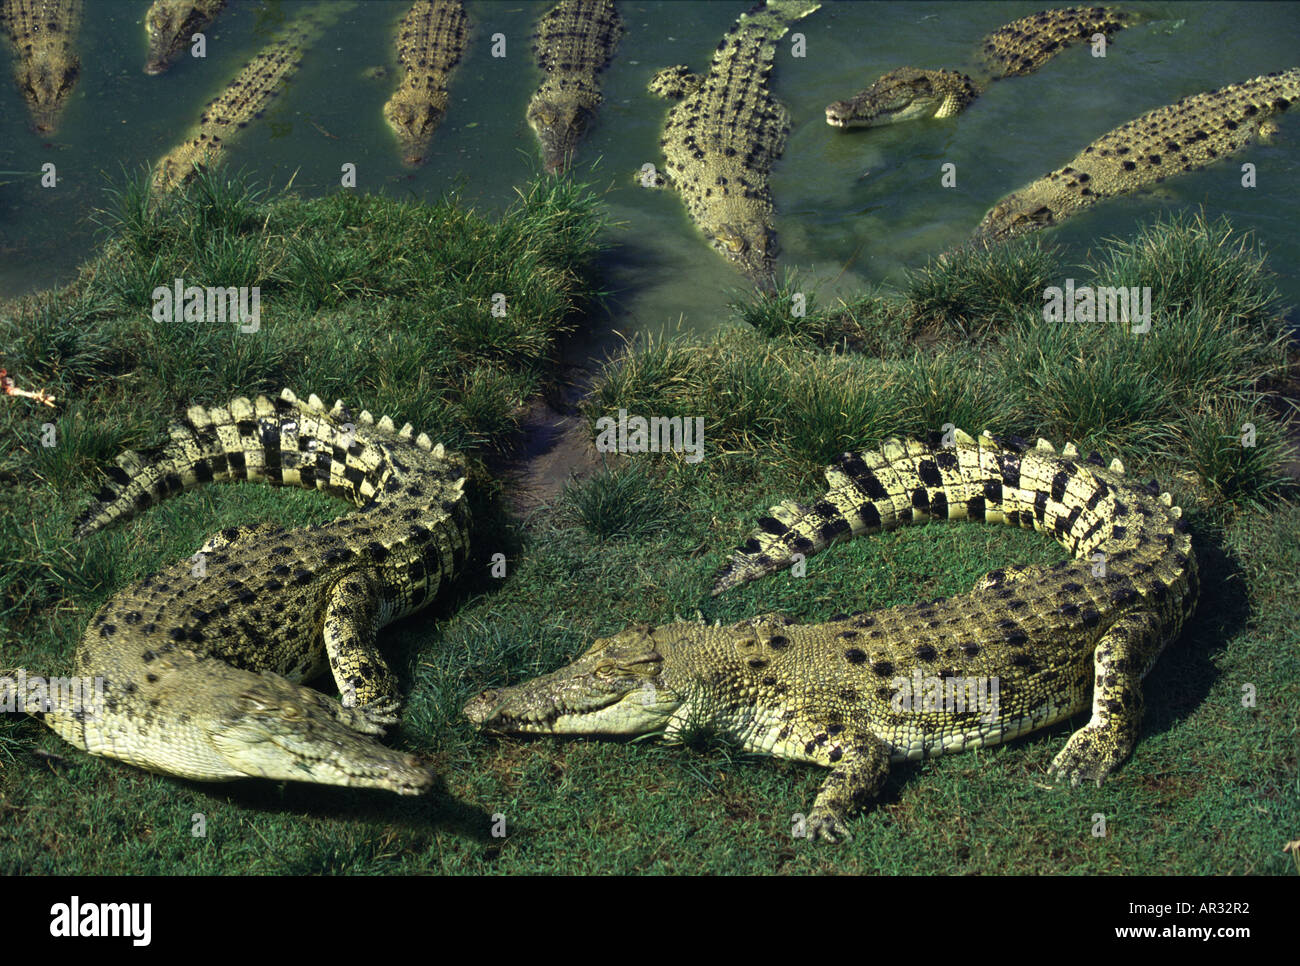 Saltwater crocodiles, Arnhem Land, Northern Territory, Australia Stock Photo